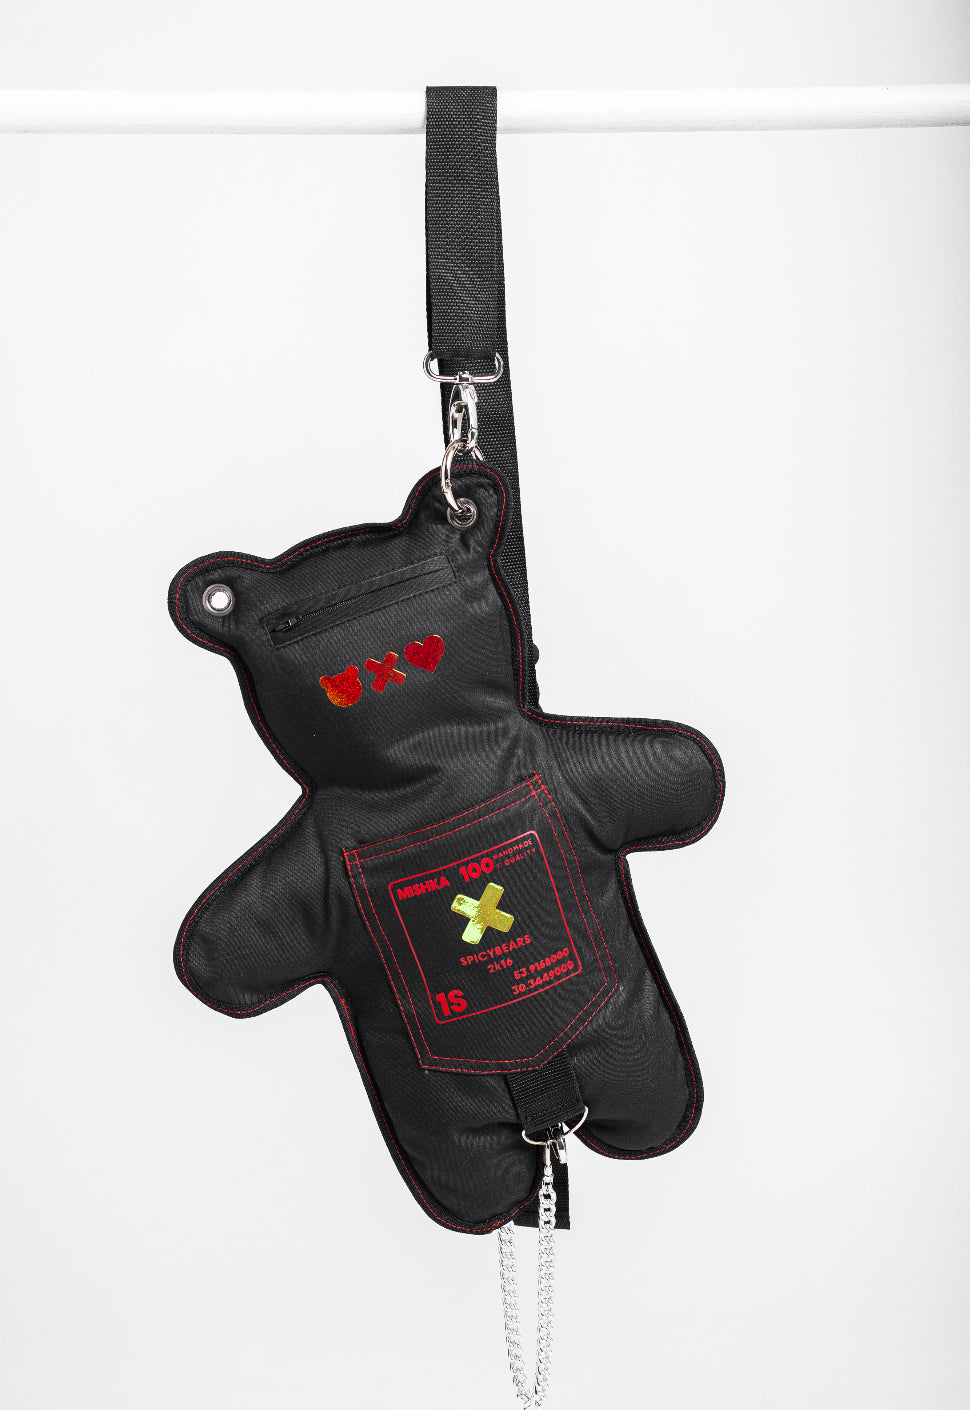 Two-sided Unisex Handcrafted Black Chameleon Shoulder Bag with Roomy Pockets and Back Patch Pocket